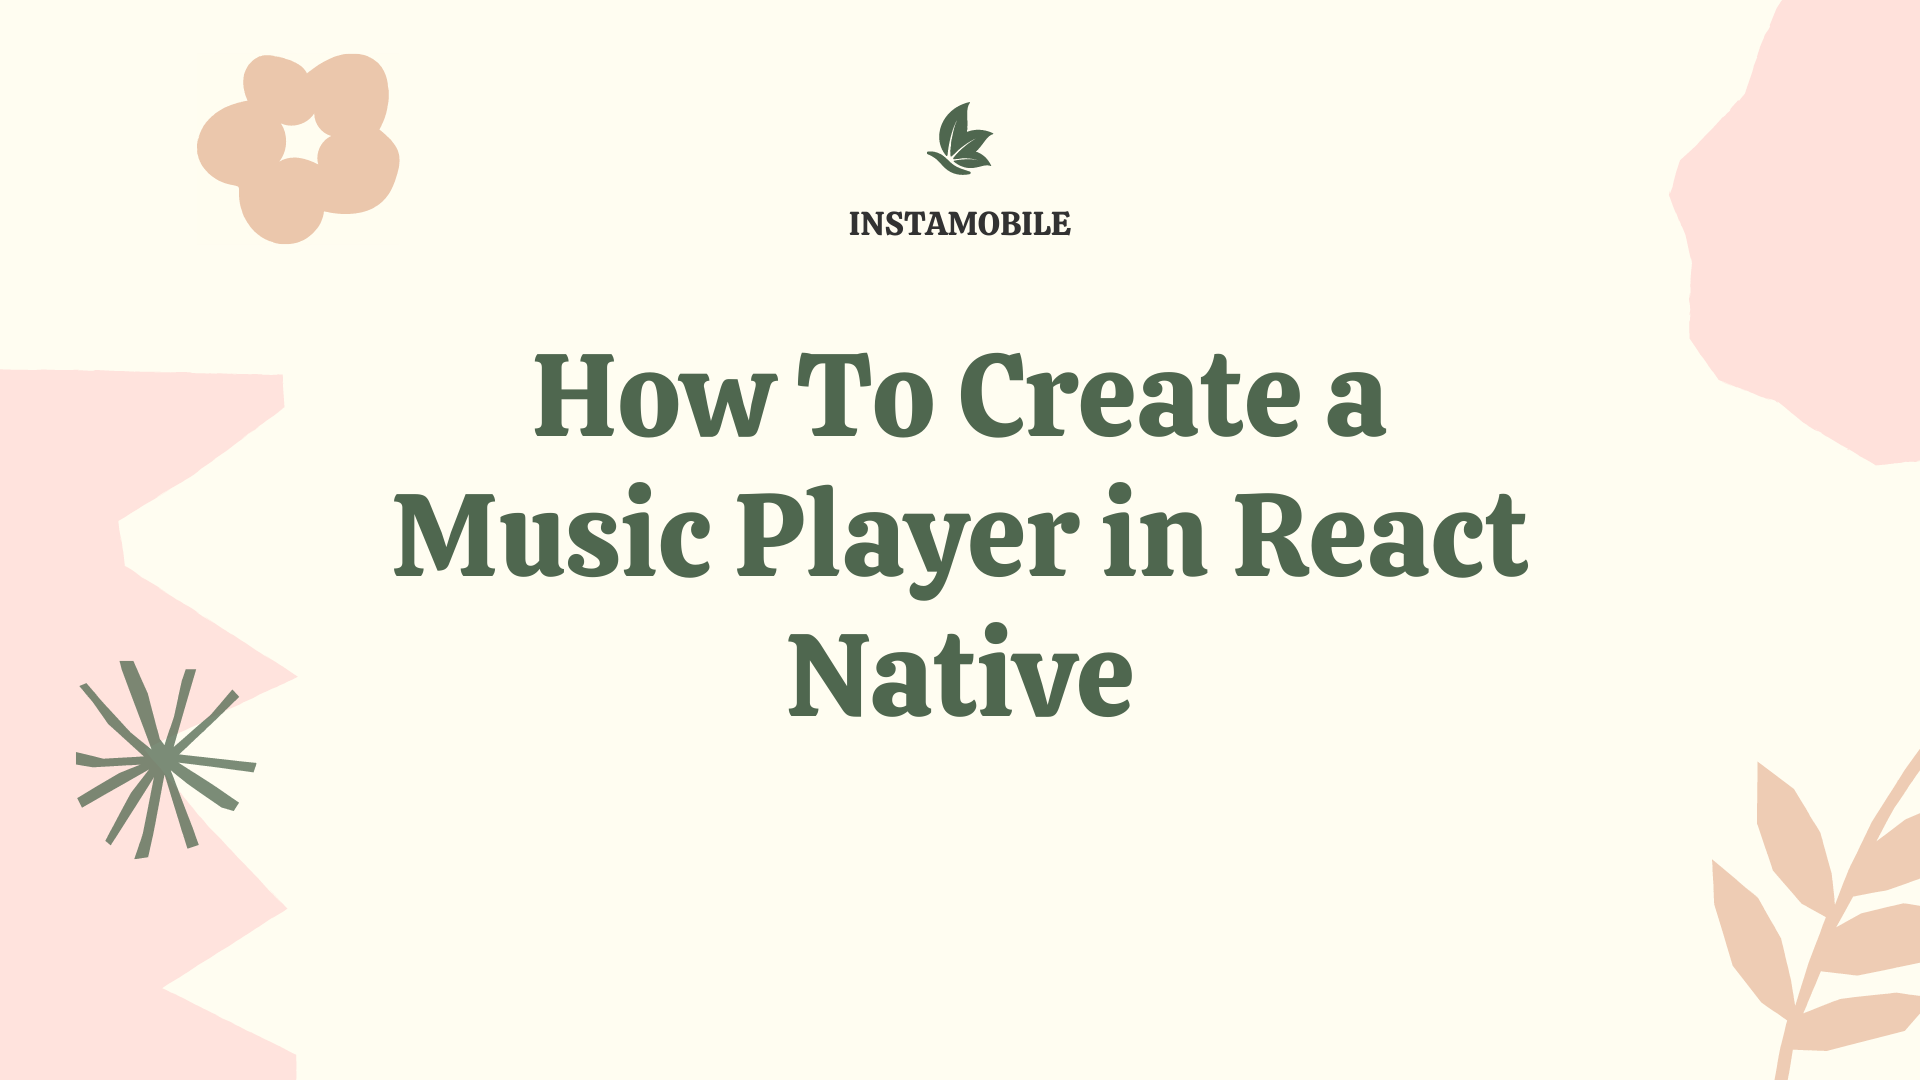 react native music player